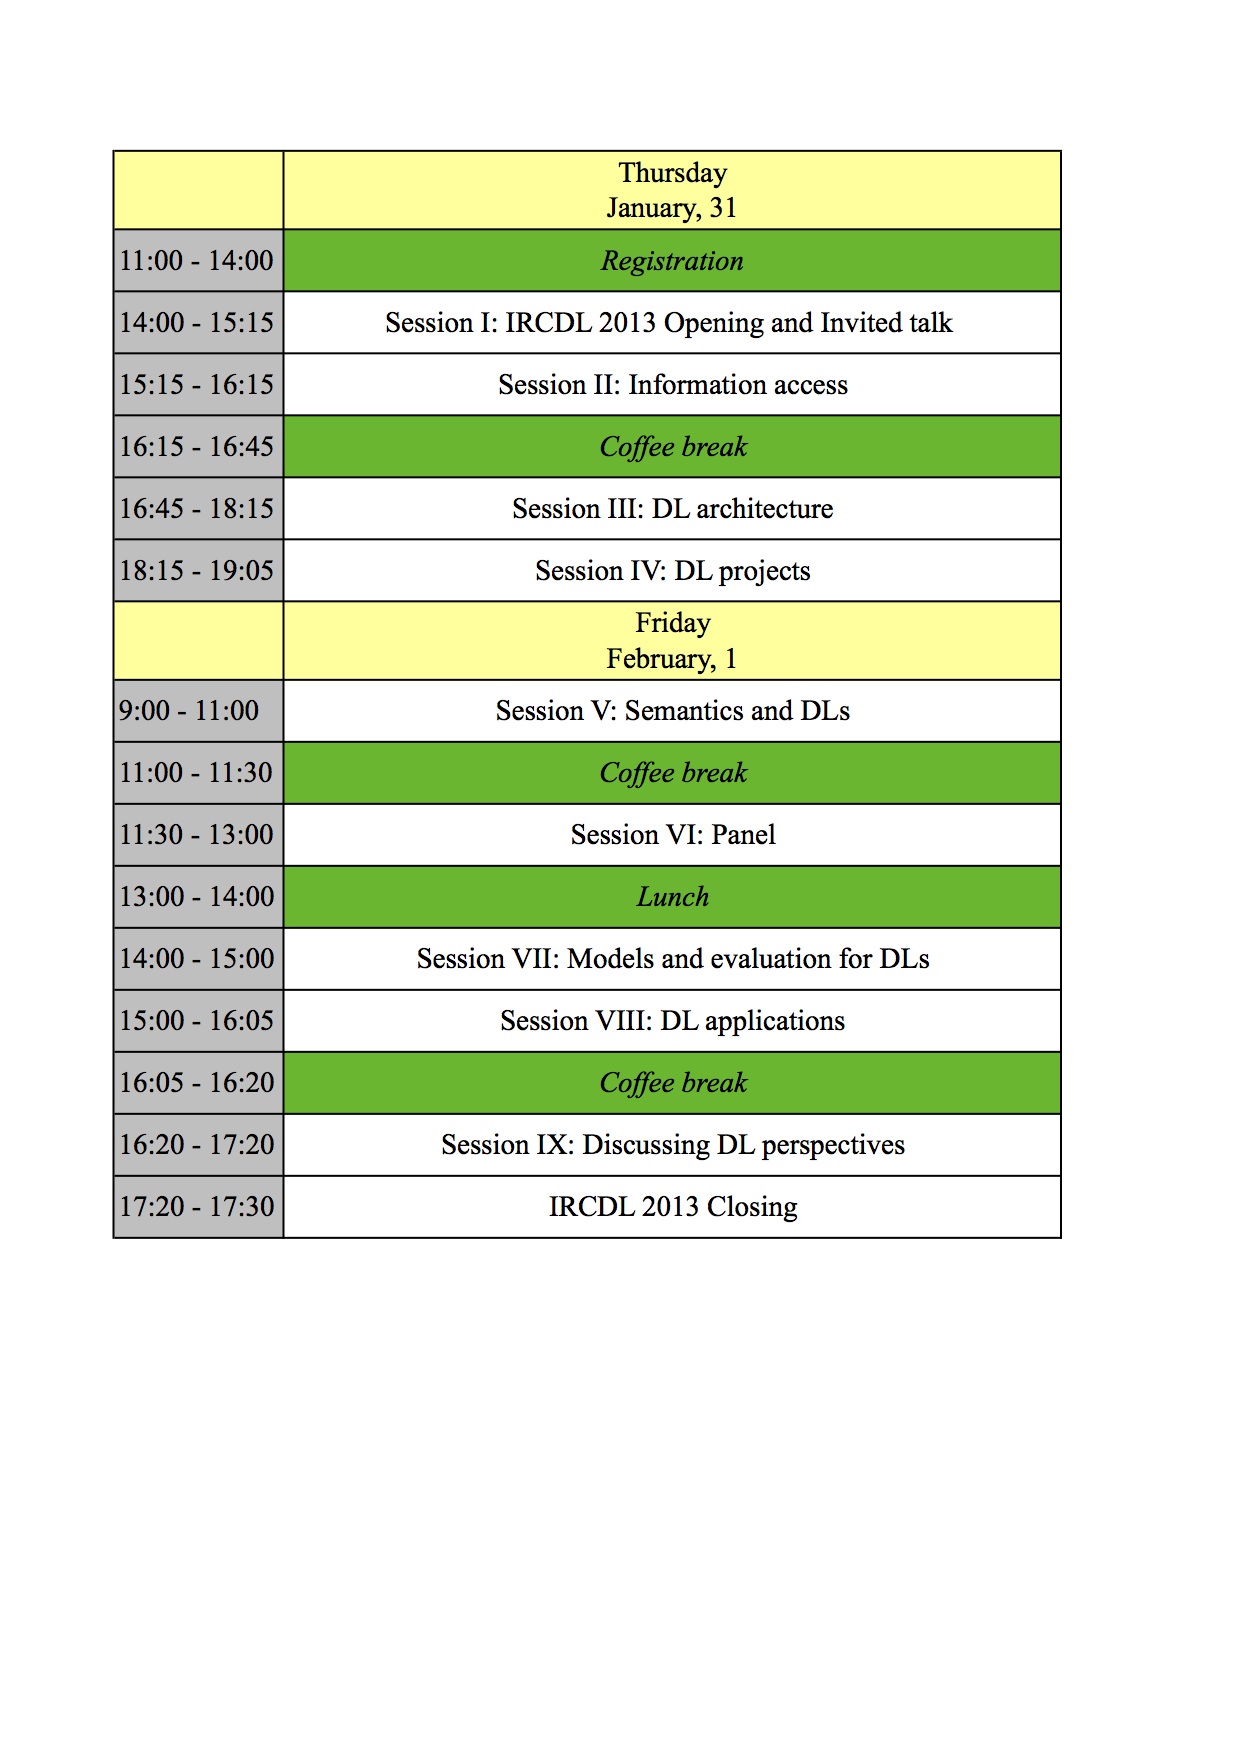 IRCDL 2013 Program overview